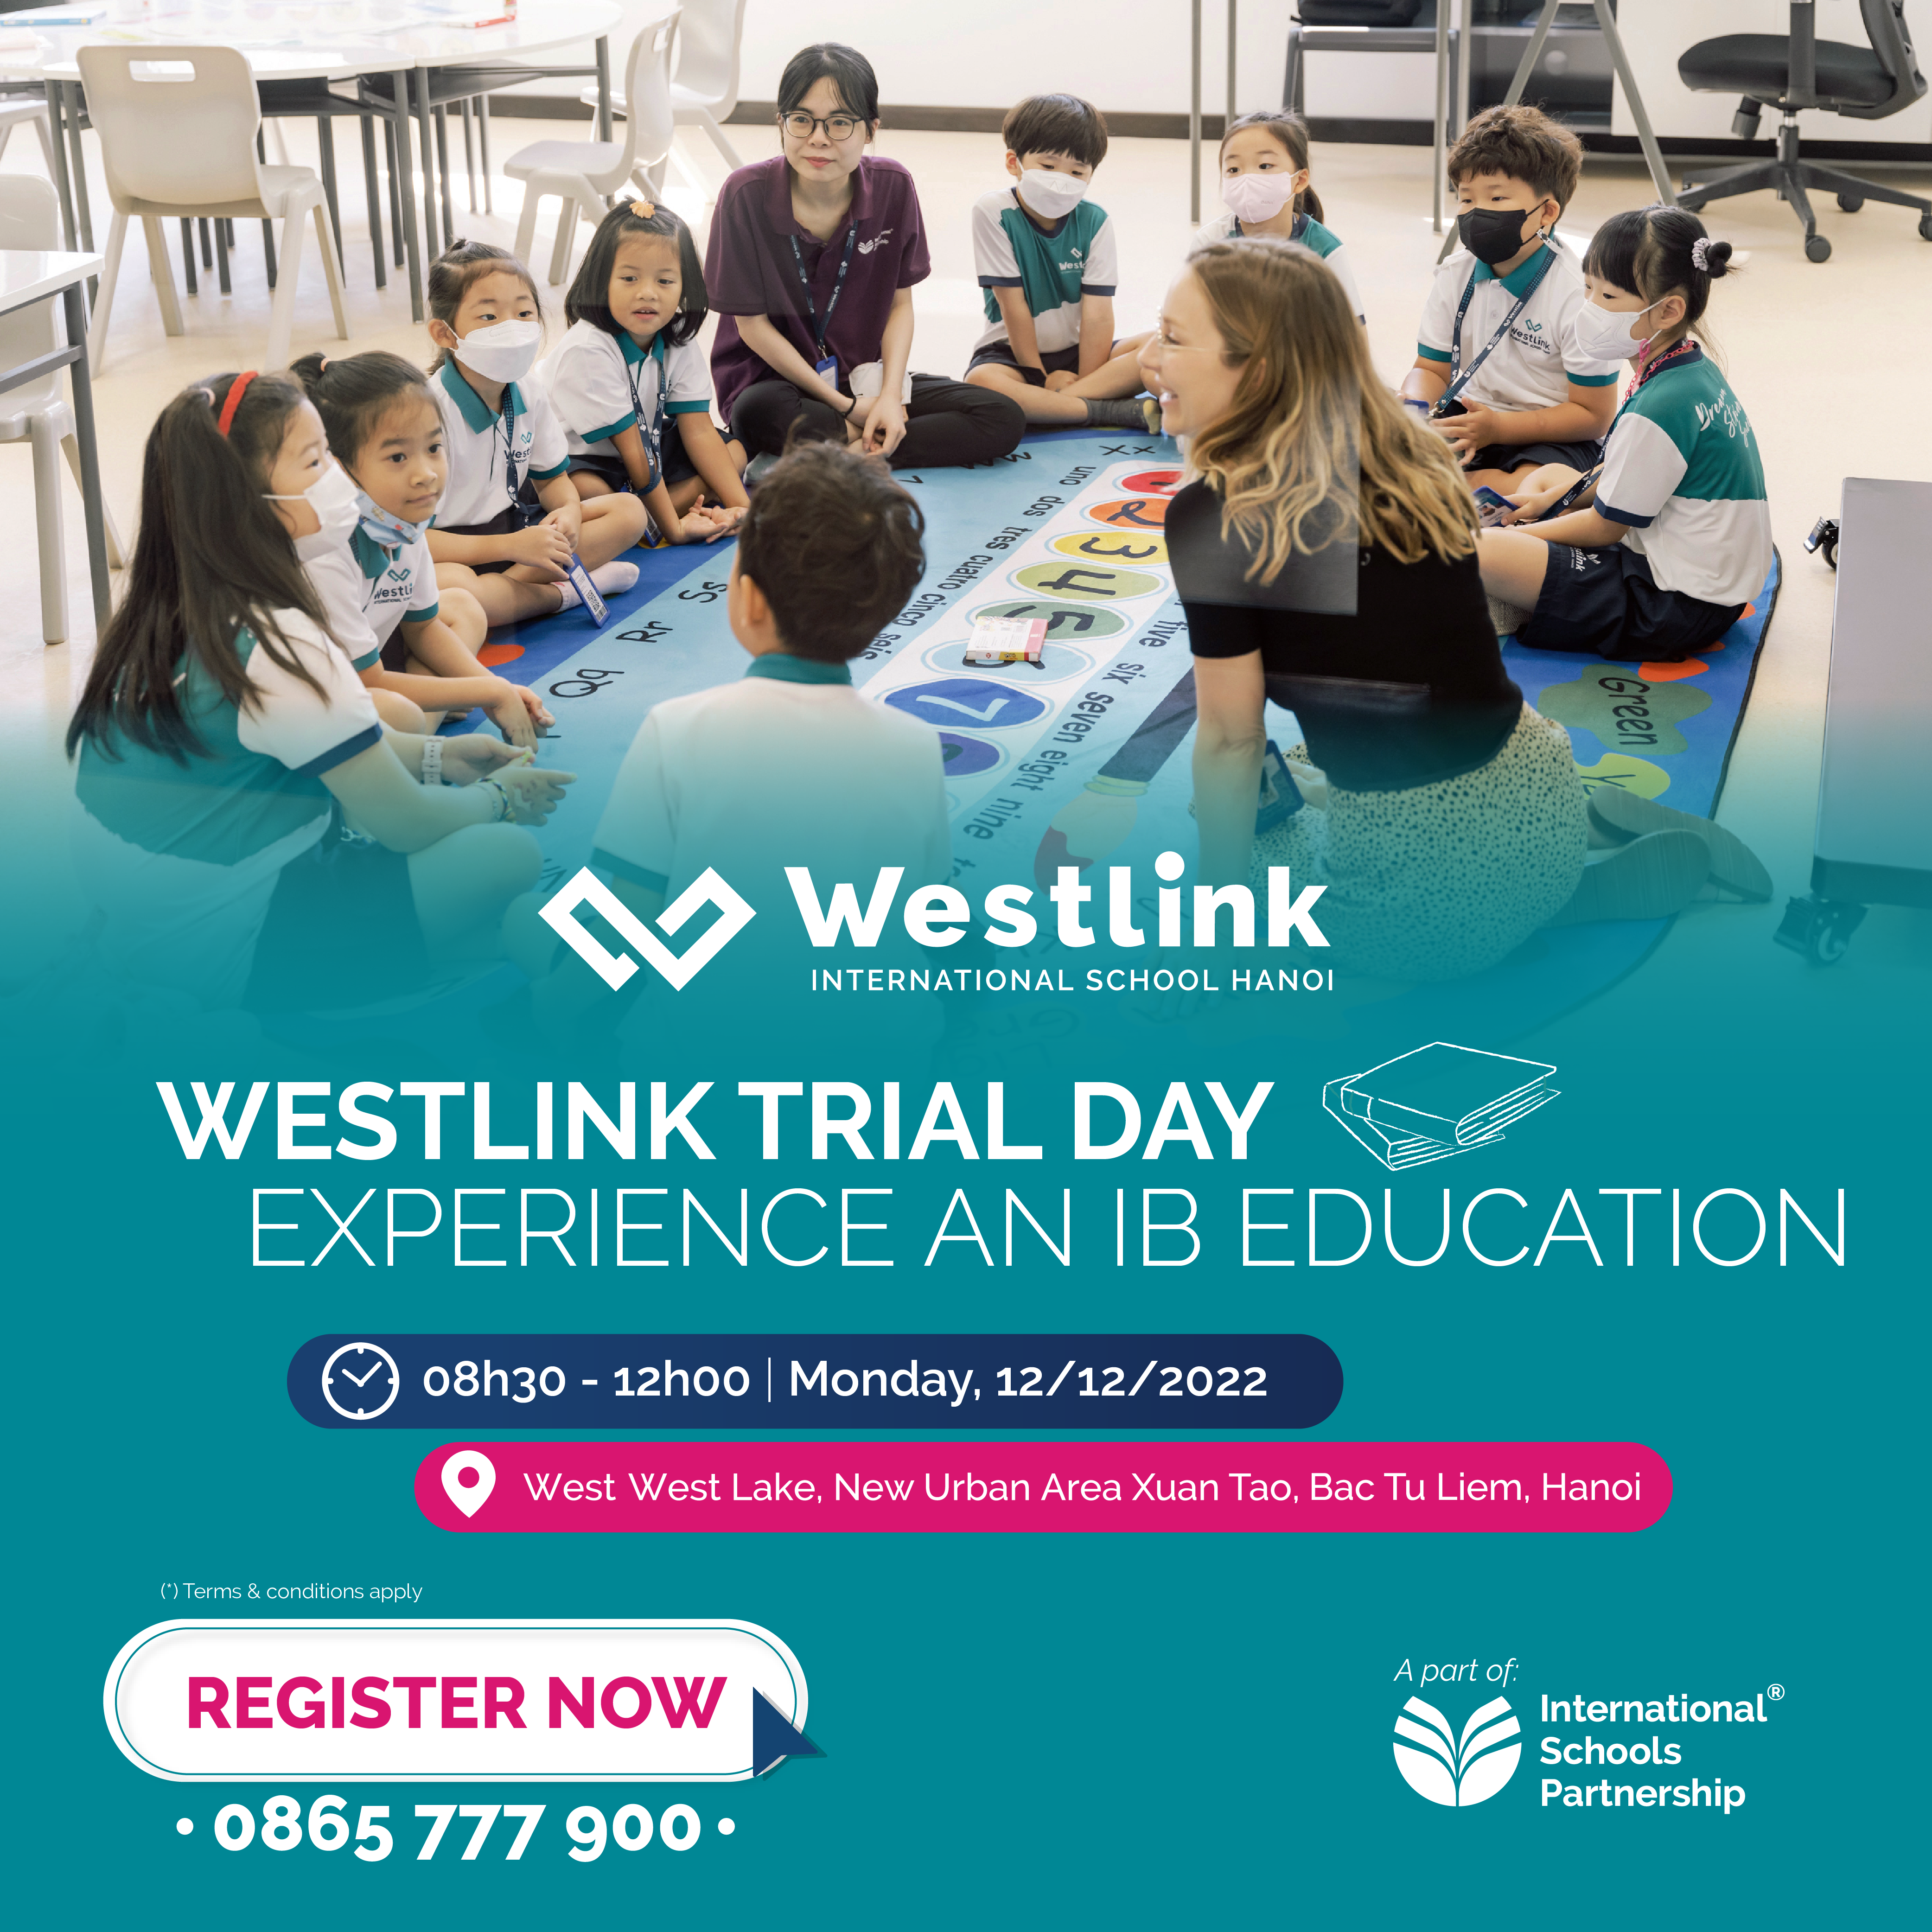 Westlink Trial Day: Experience an IB education at Westlink International School